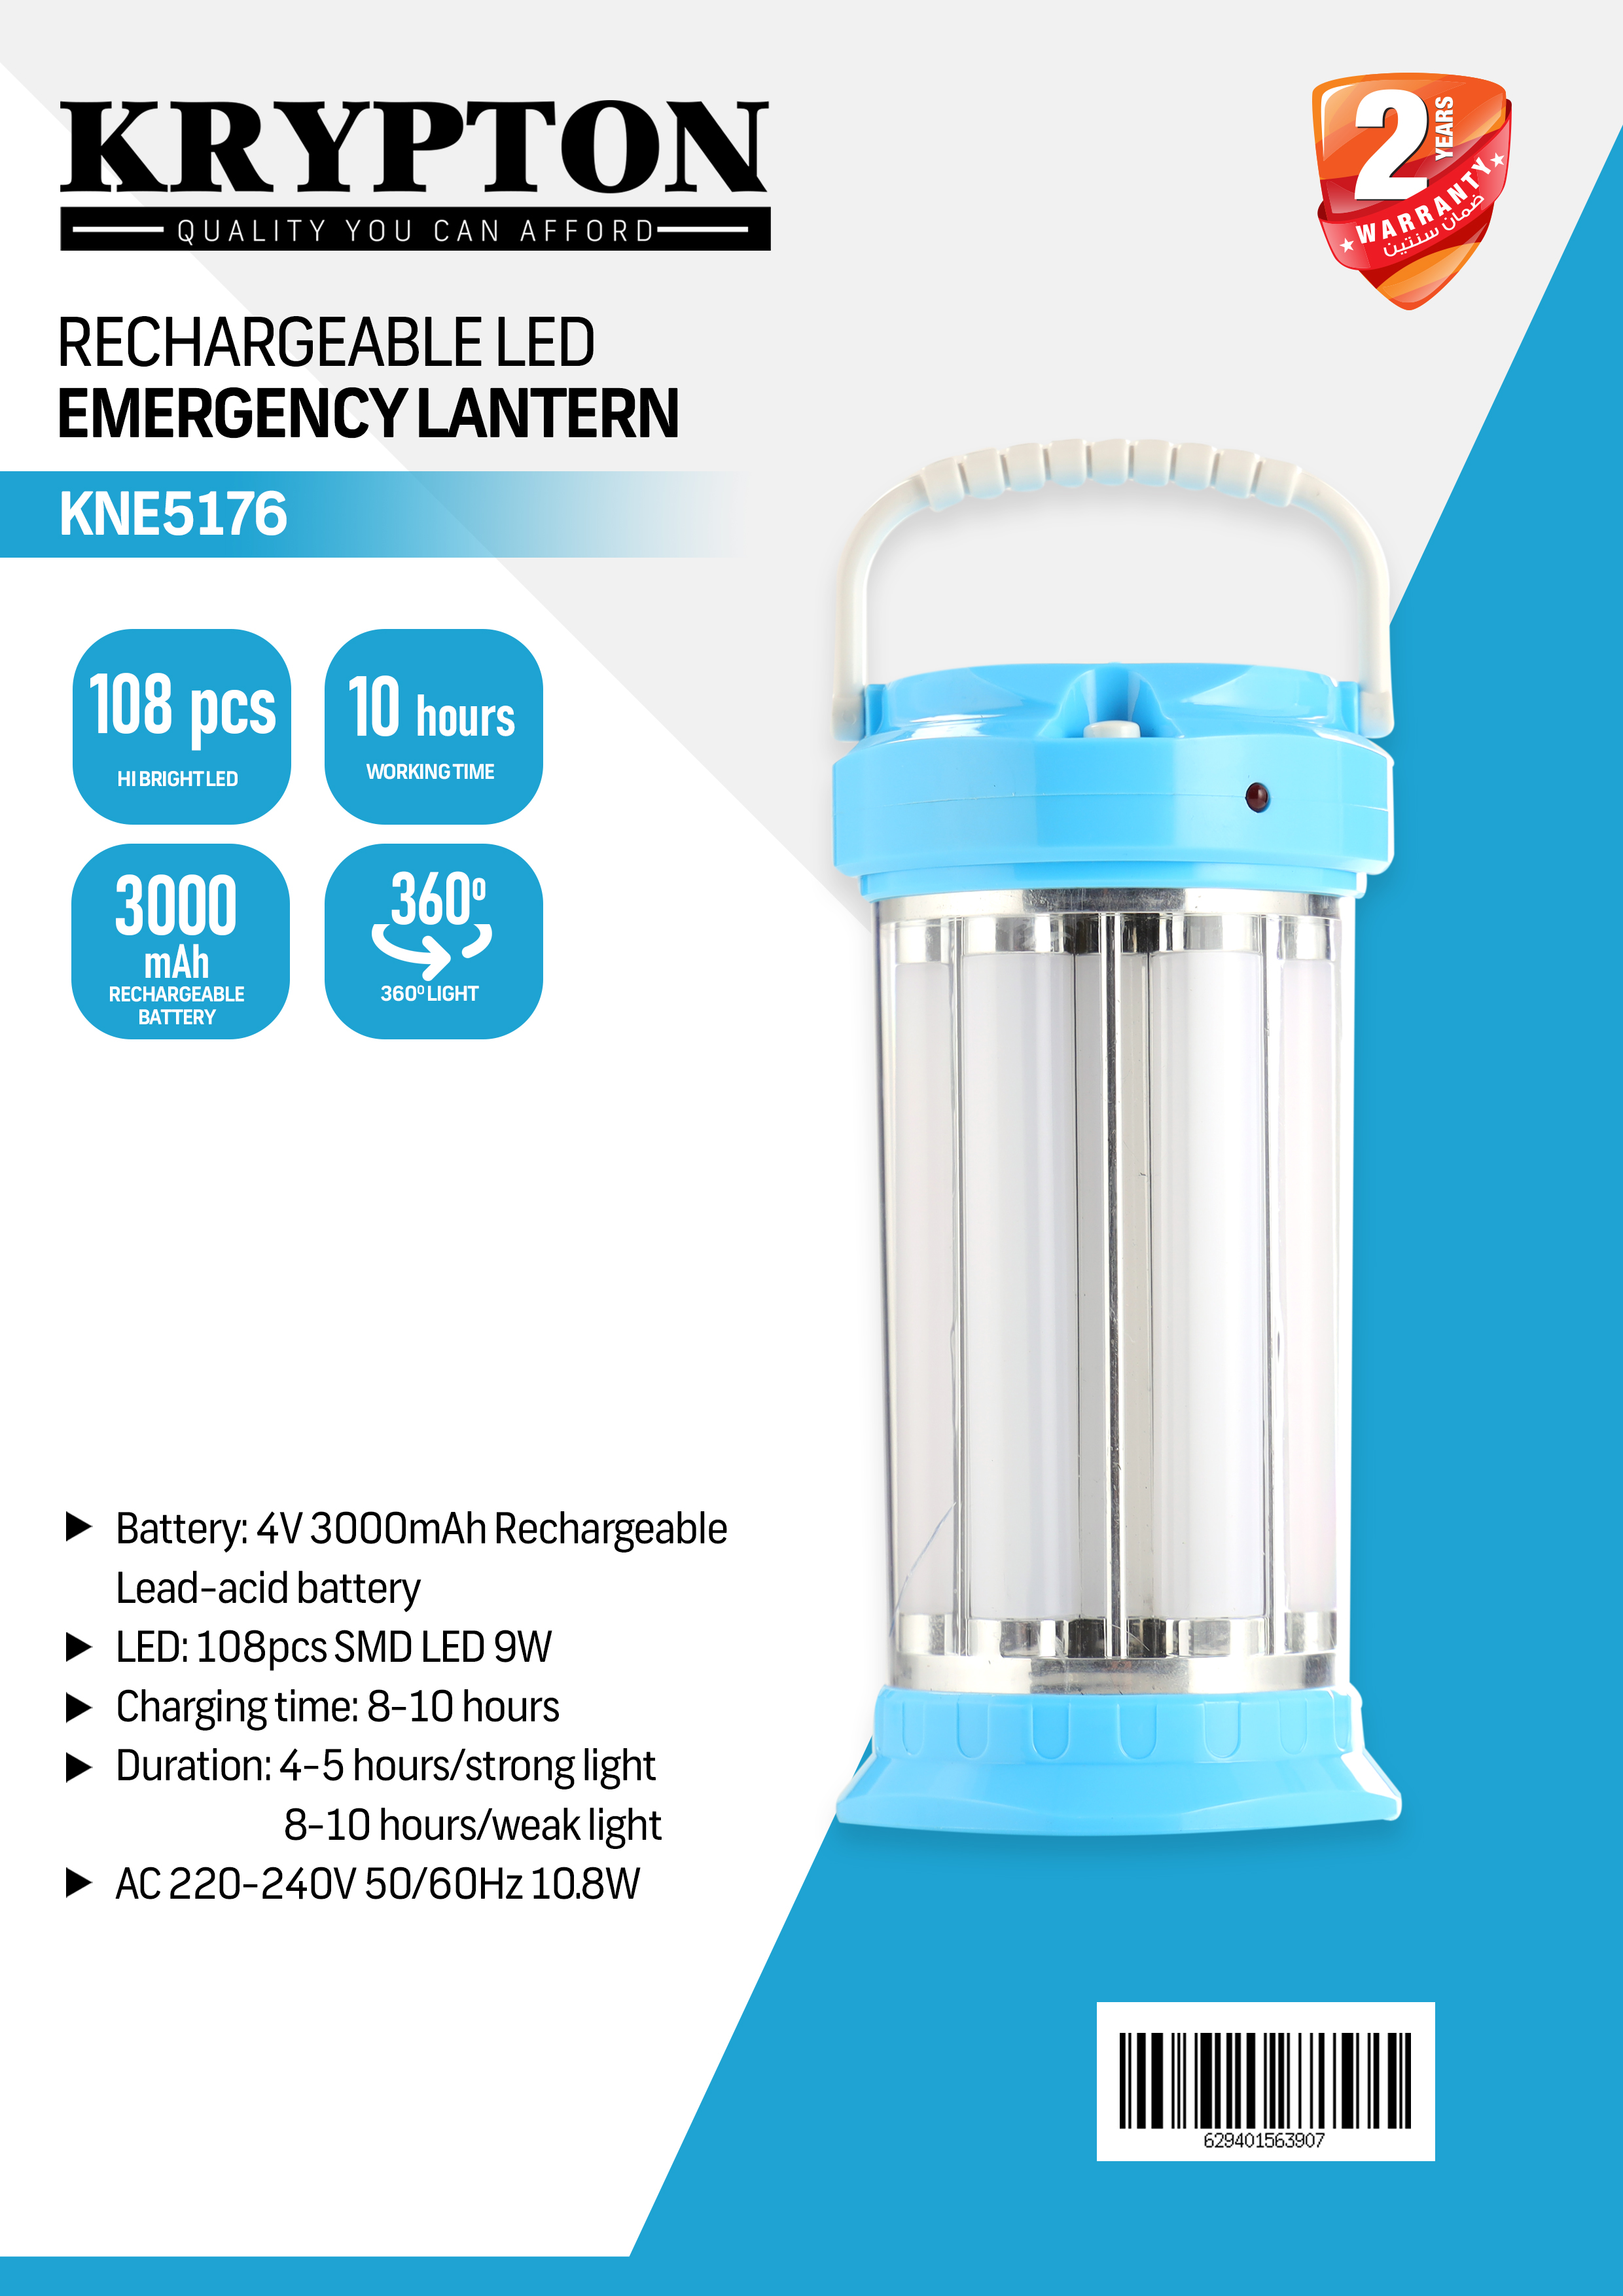 Rechargeable LED Emergency Lantern